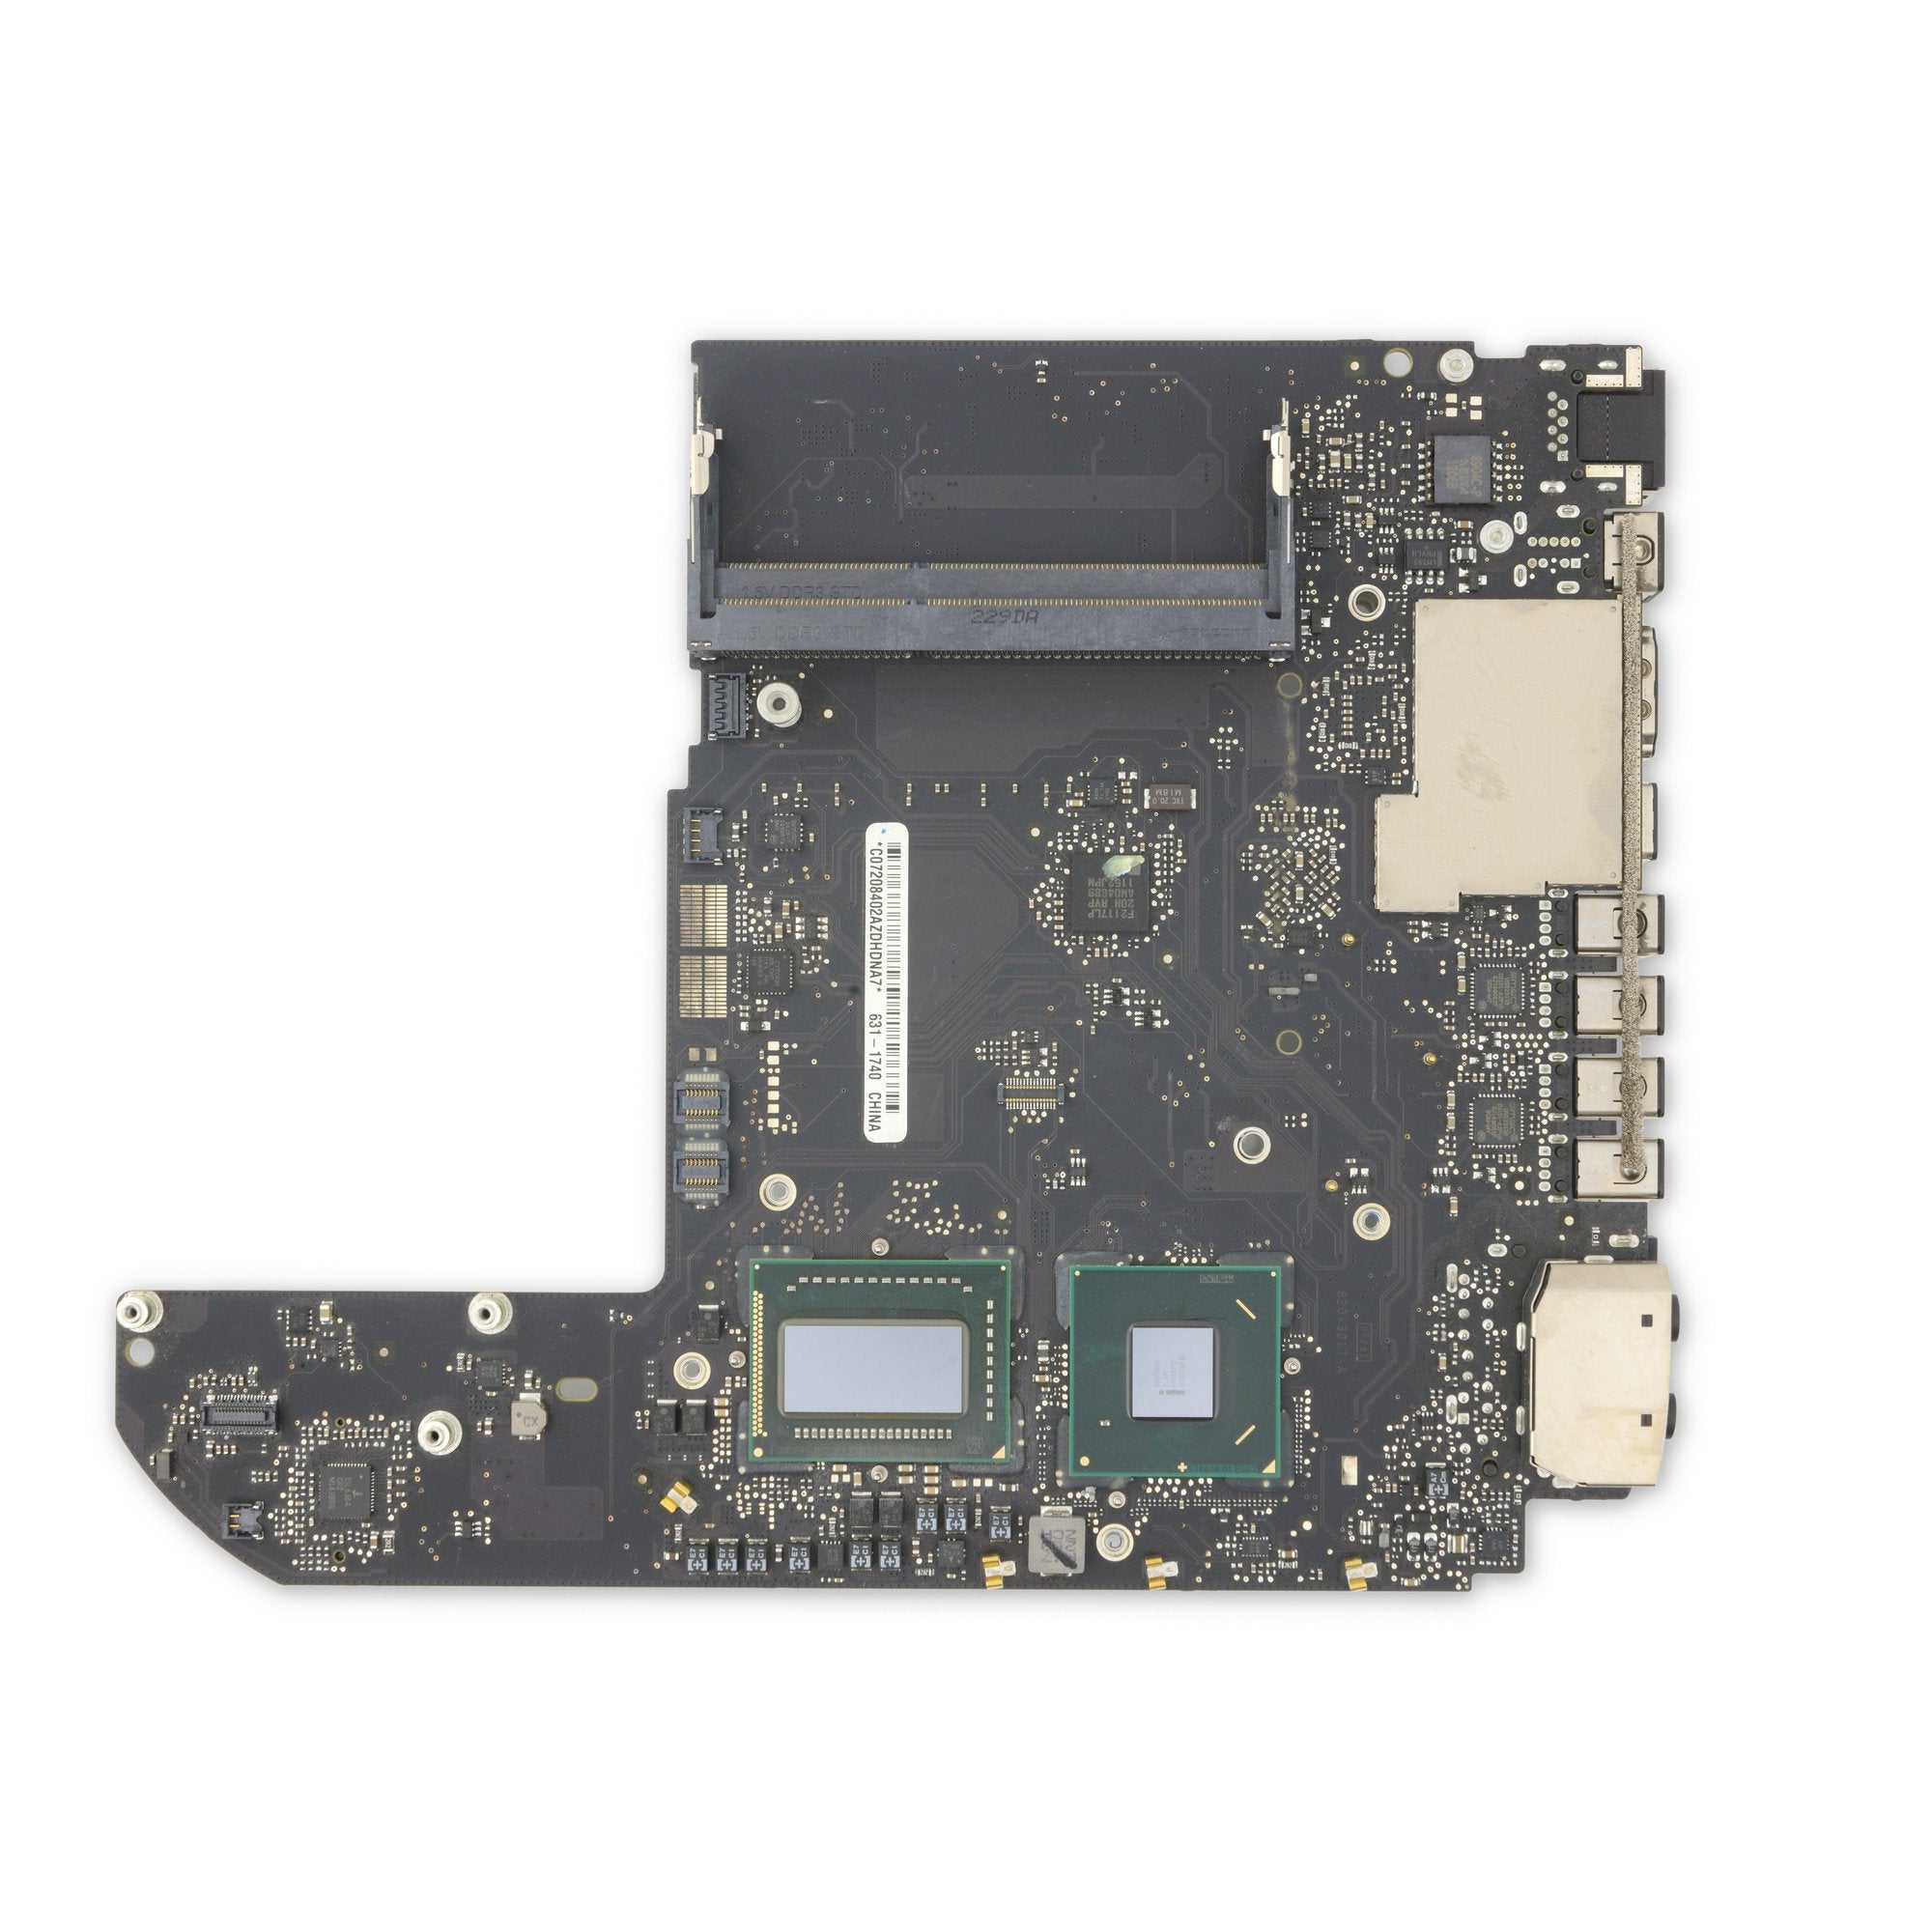 Mac mini A1347 (Mid 2011) 2.0 GHz Logic Board Used